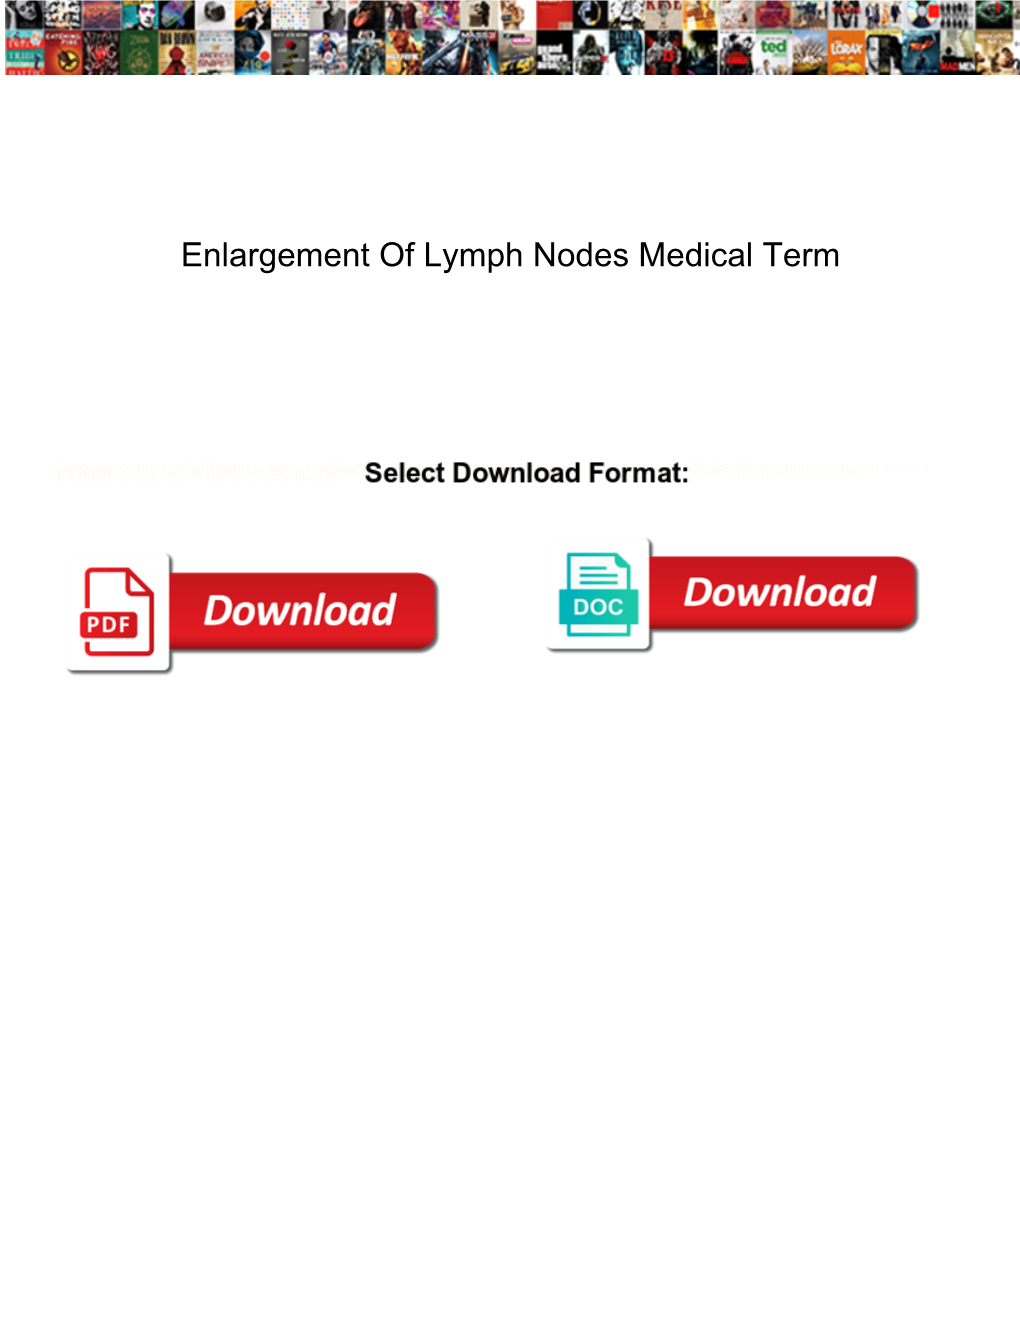 Enlargement of Lymph Nodes Medical Term